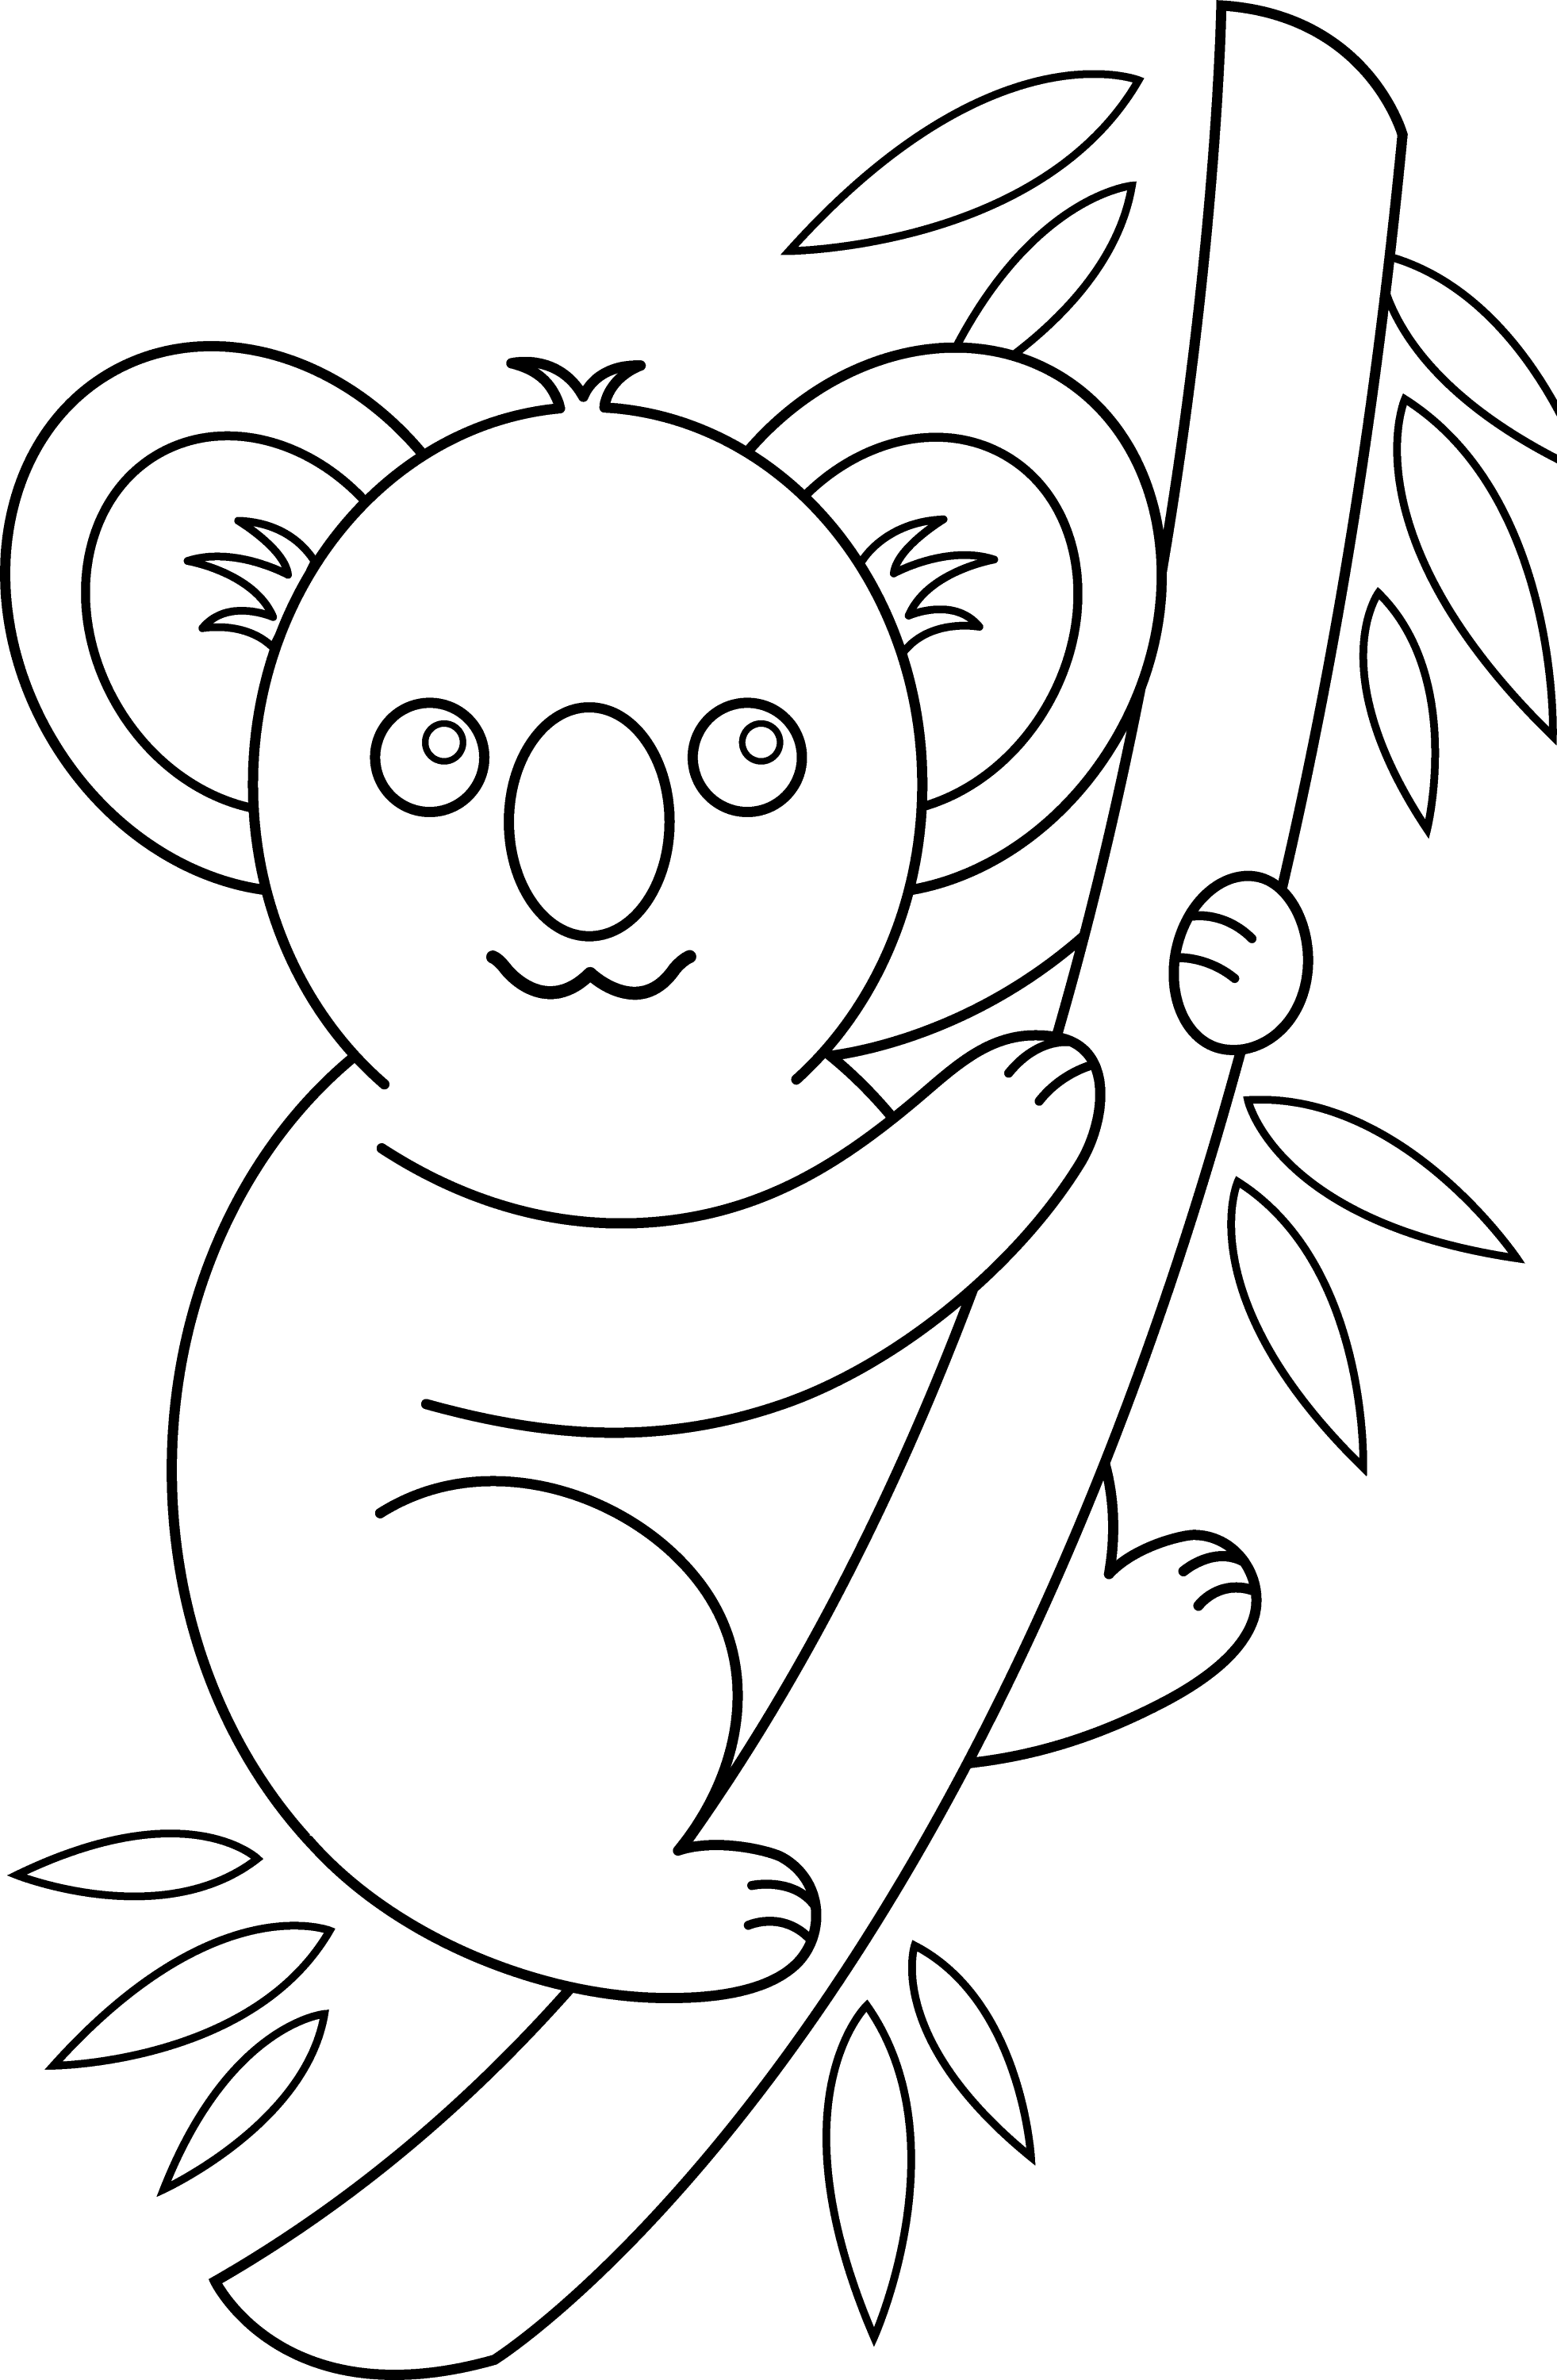 Free Printable Koala Coloring Pages